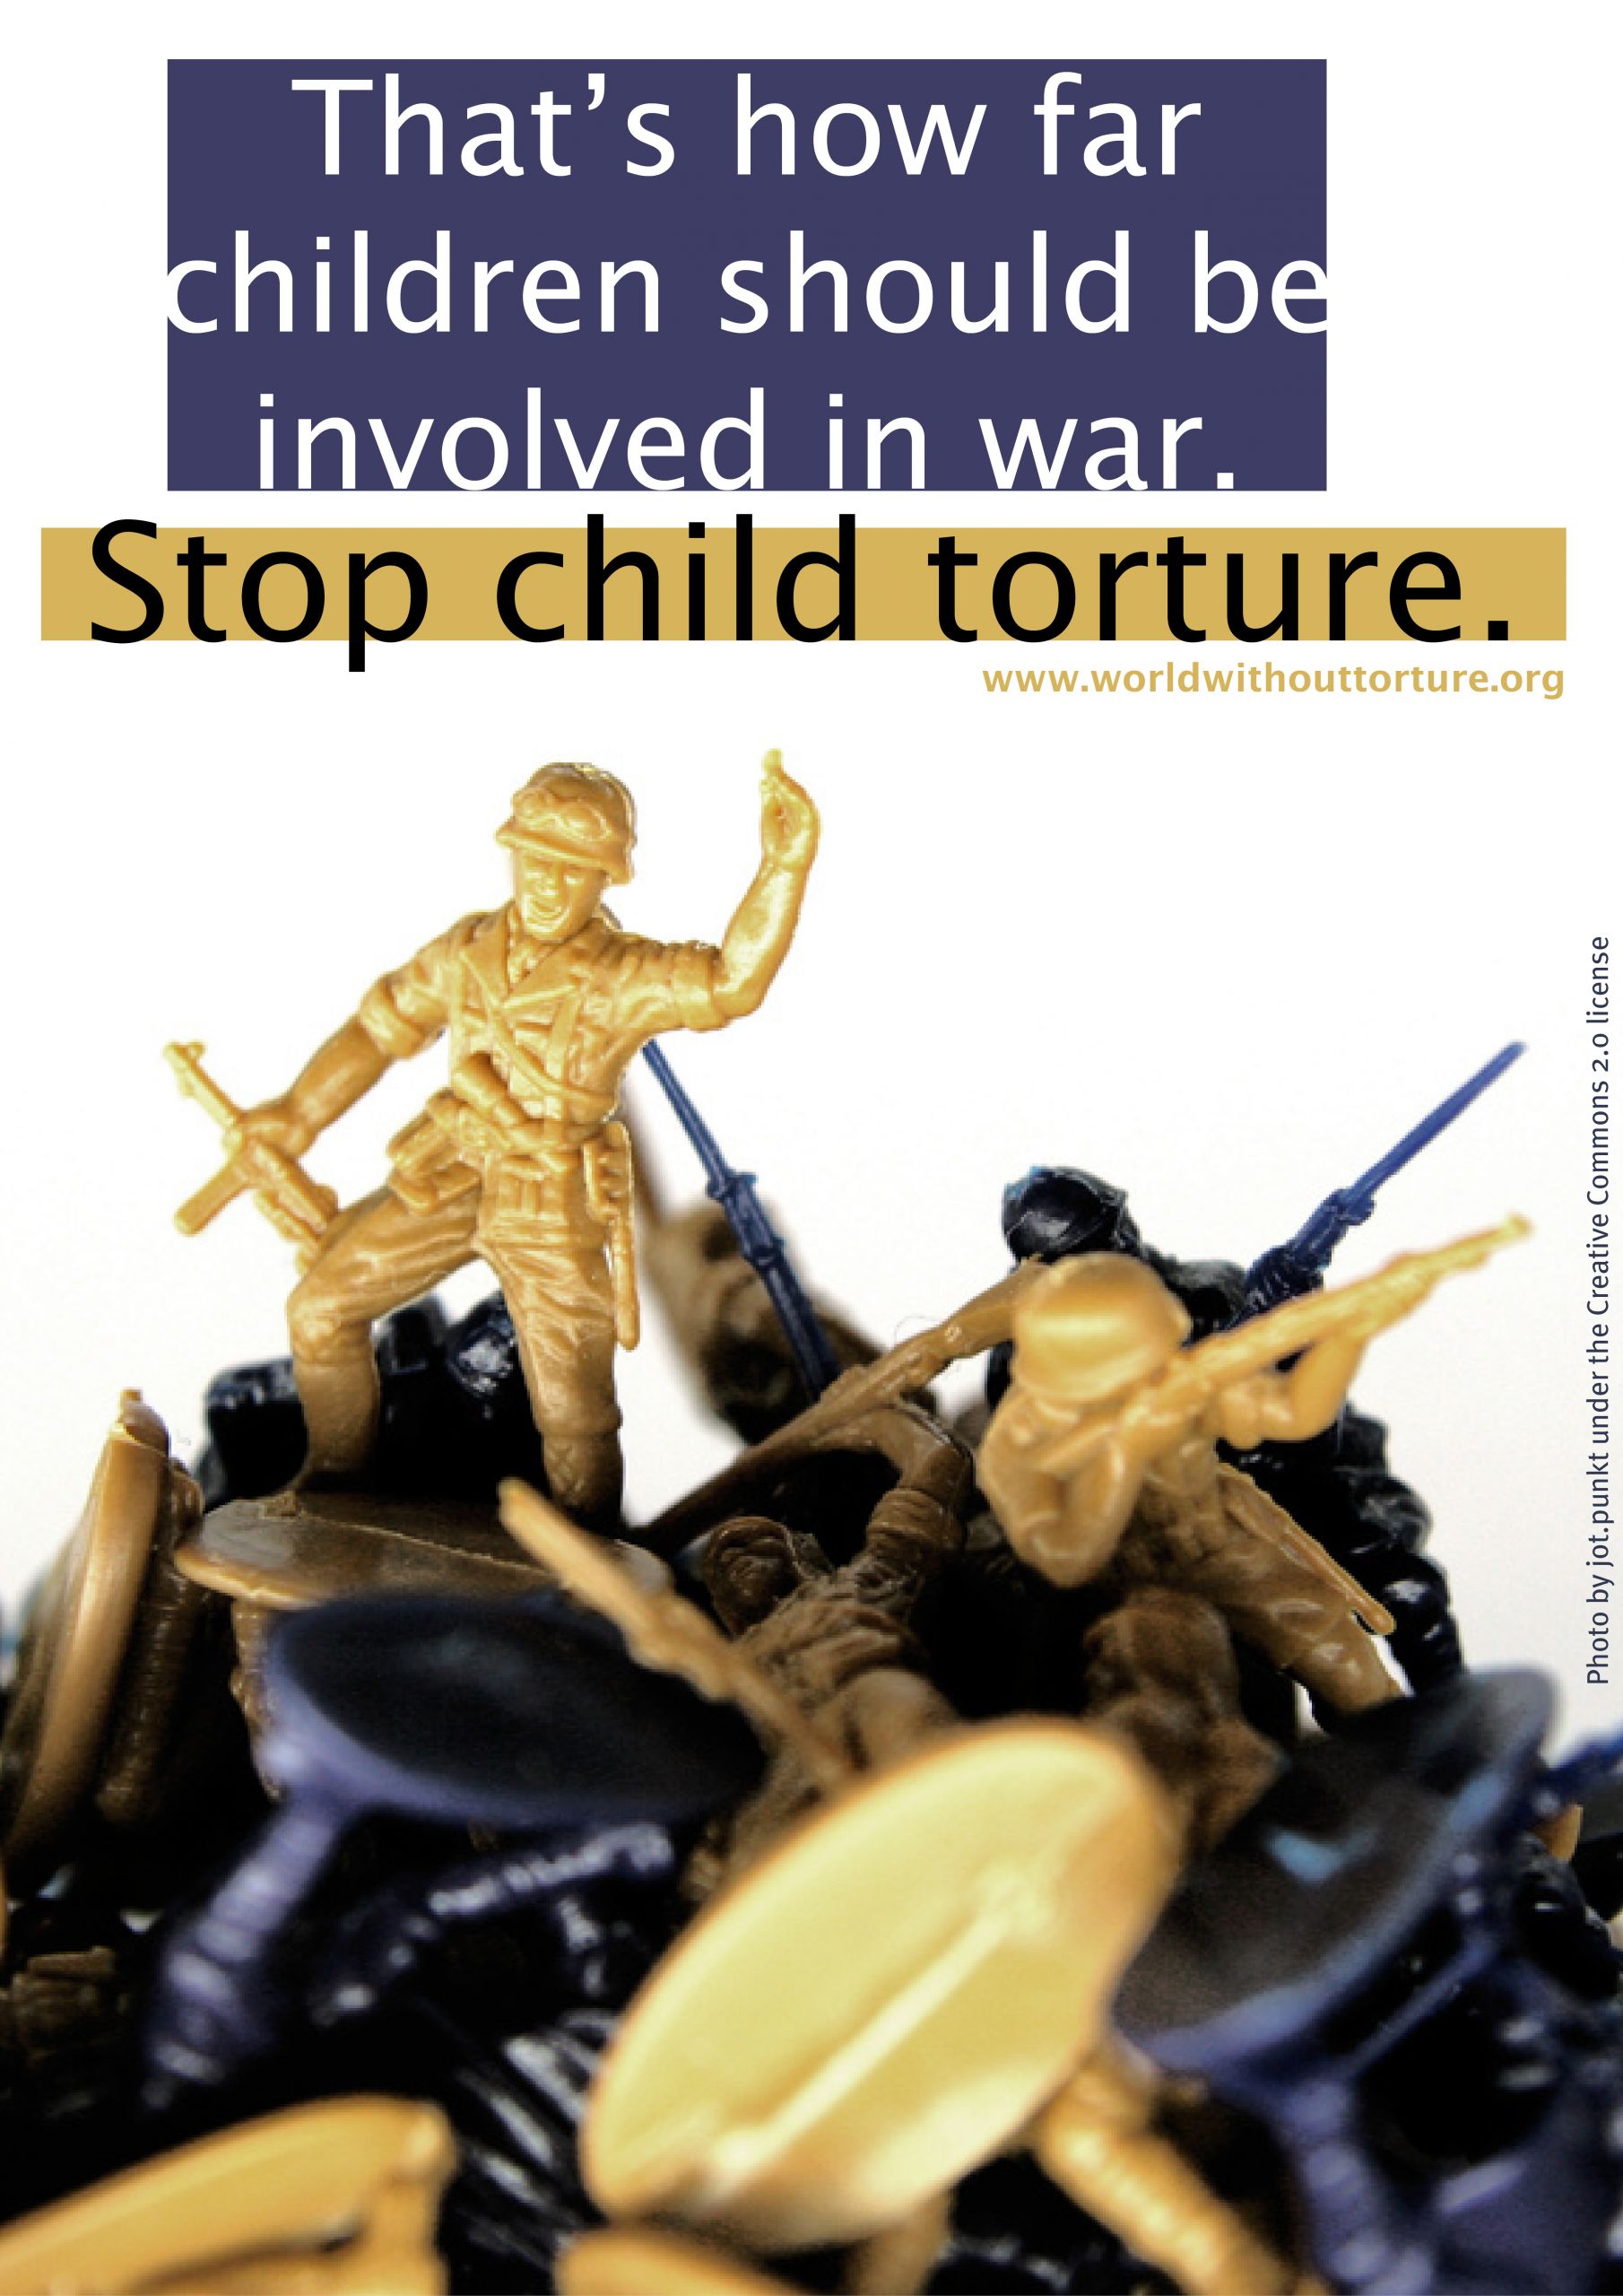 Child Soldier Quote
 Child sol rs child survivors of torture